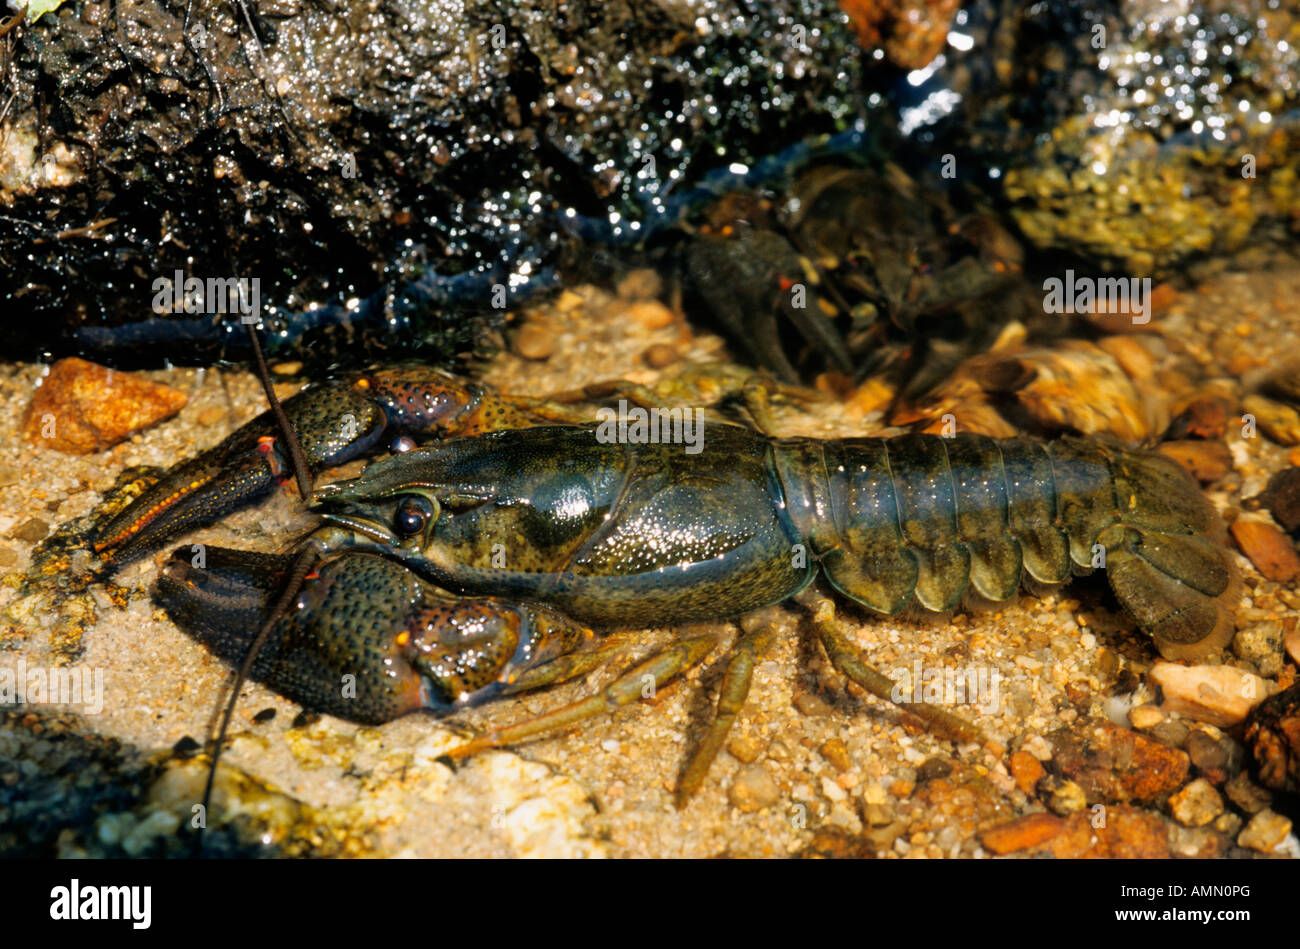 Noble Crayfish Astacus astacus ecrevisse aa pieds rouges morvan france Europa Europe adult animal animals crustacean crustaceans Stock Photo